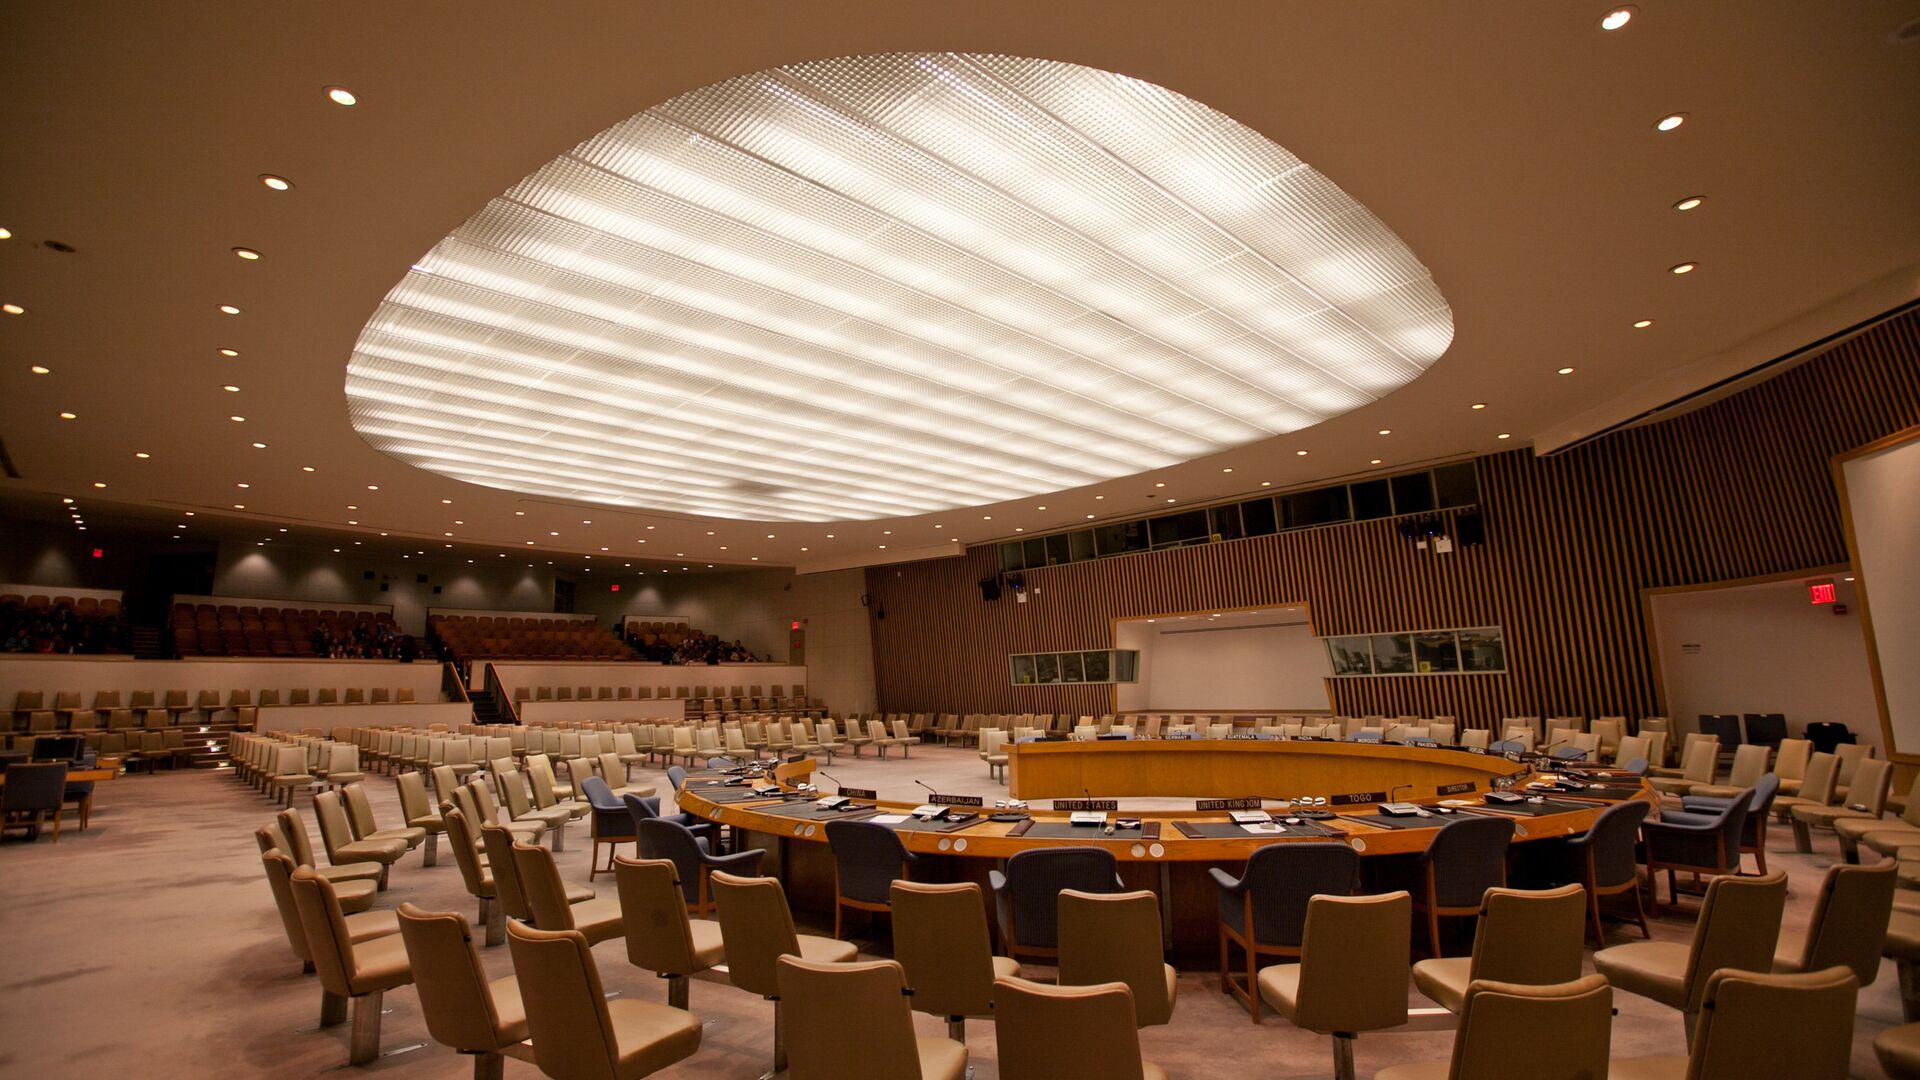 UN Security Council chamber (File photo). - Sputnik International, 1920, 17.09.2021